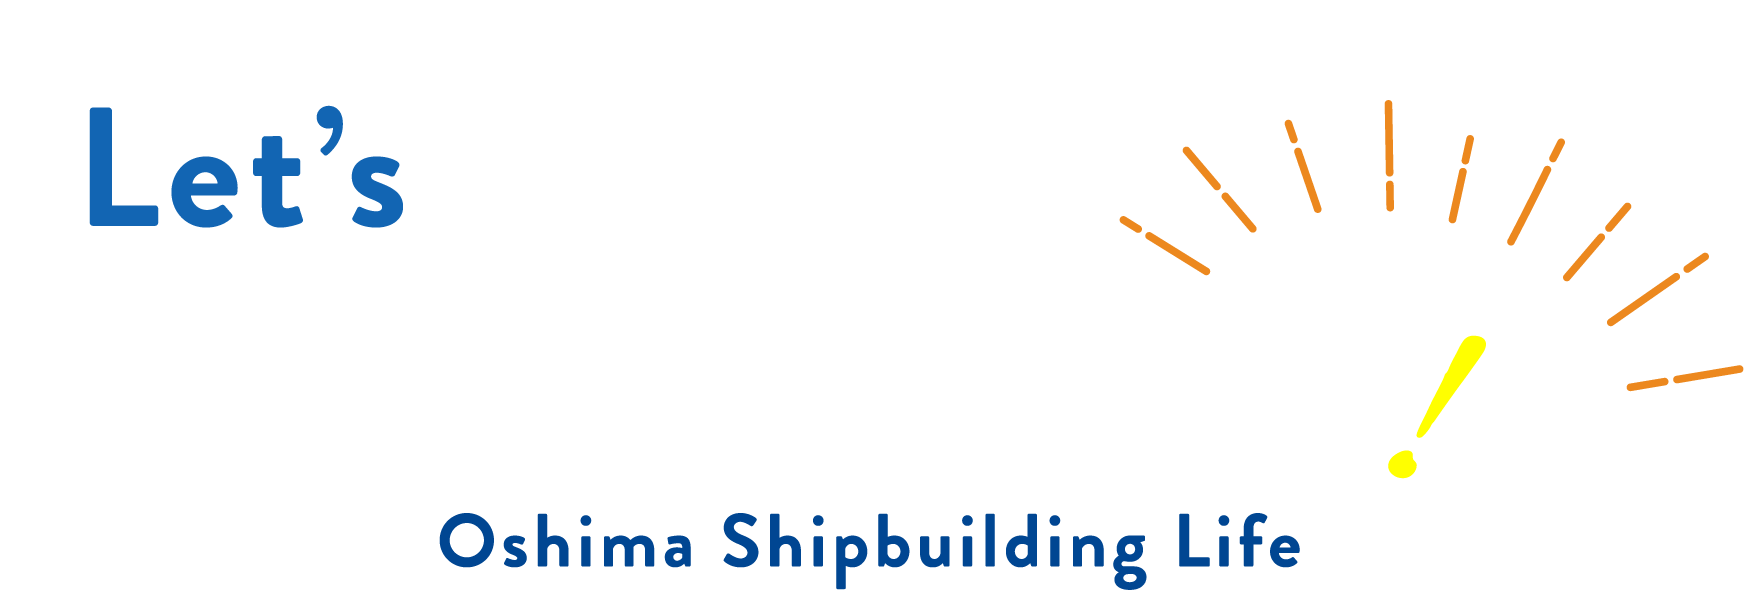 Let's 大島造船所ライフ！Oshima Shipbuilding Life